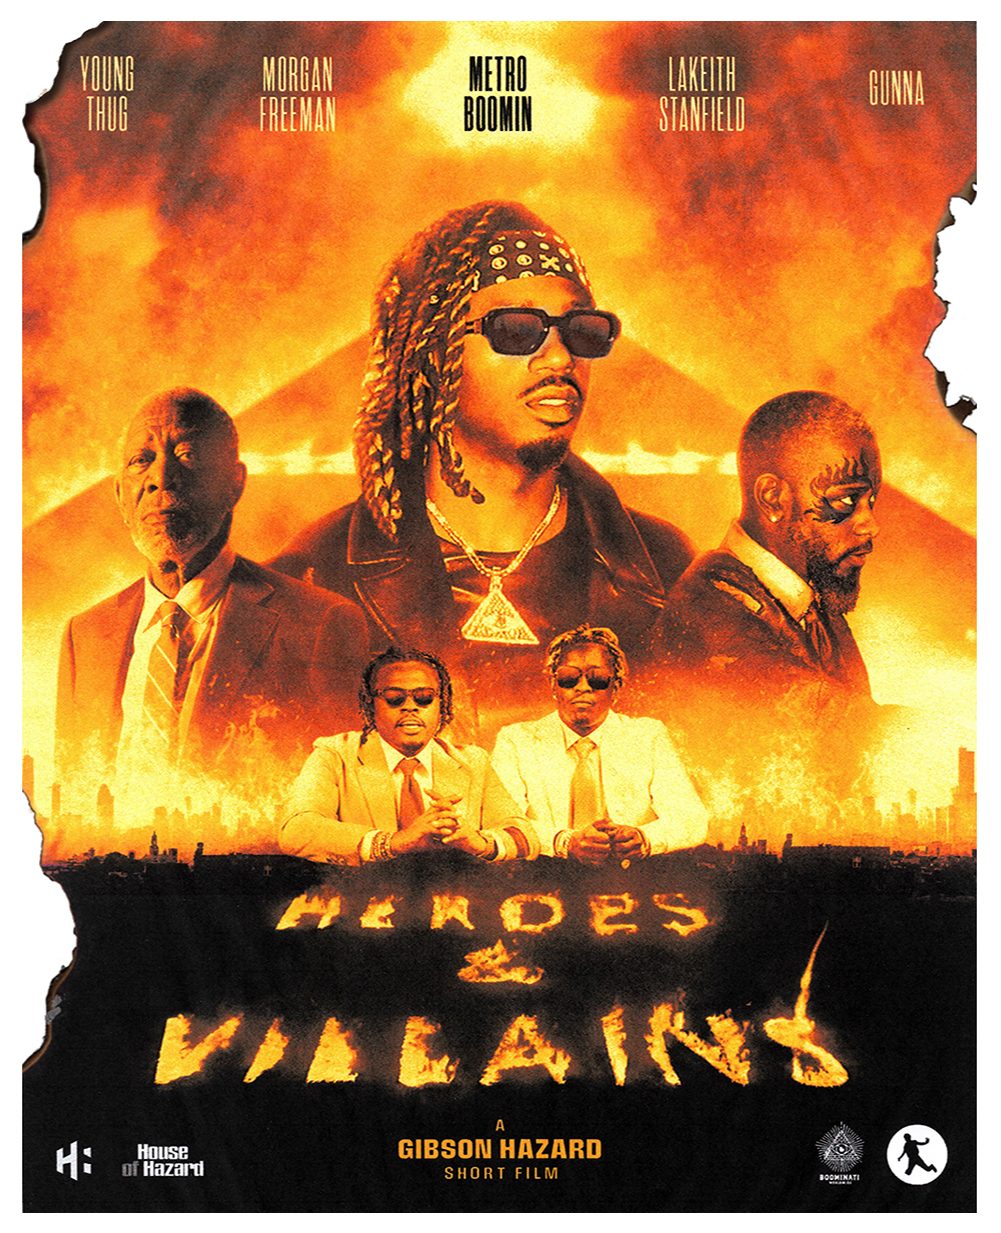 Metro Boomin 'Heroes & Villains' Movie Poster